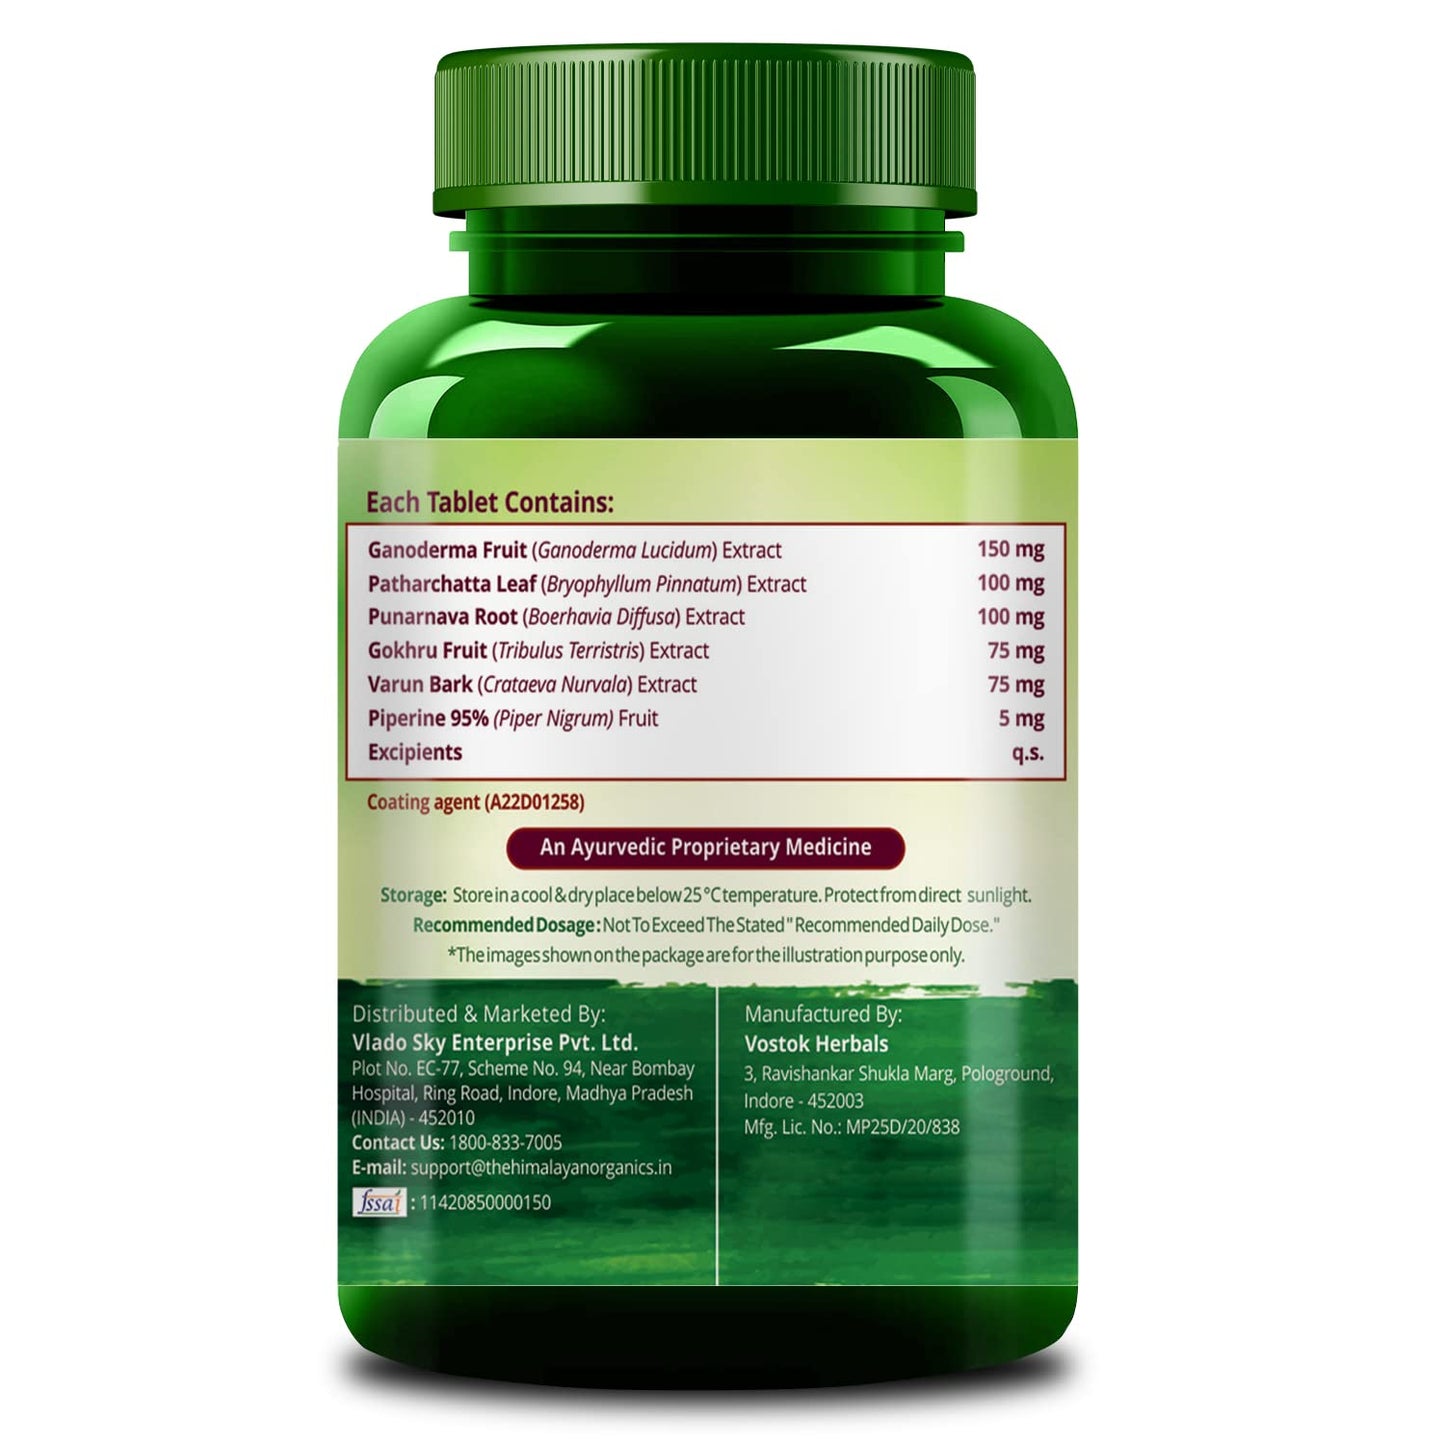 Himalayan Organics Plant Based Kidney Detox | Gokhru Punarnava | Varun & Patharchatta Leaf Extracts | Natural Diuretic & Dissolution 100% Natural Supplement - 60 Tablets